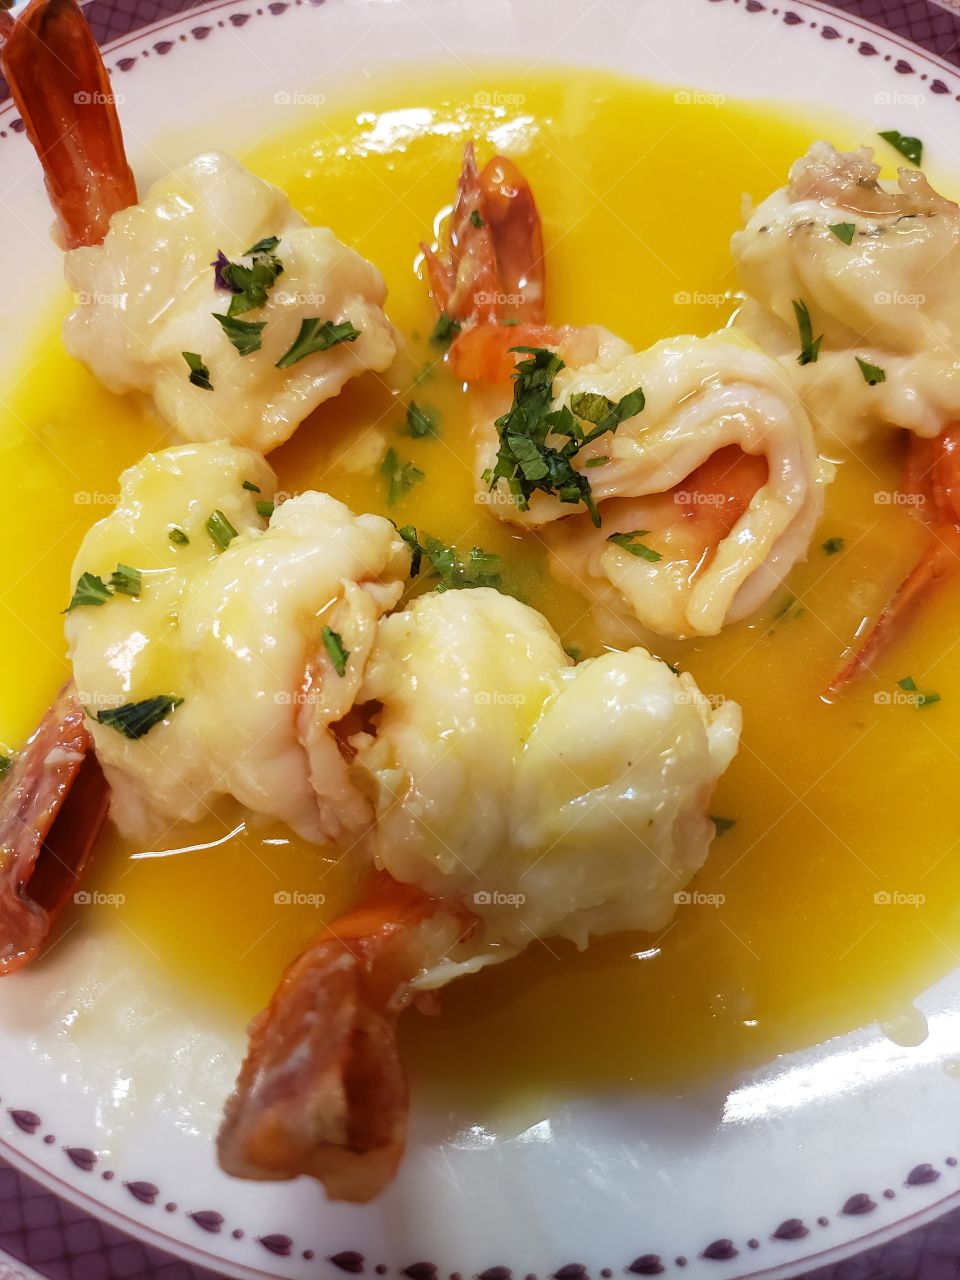 Limon garlic shrimp